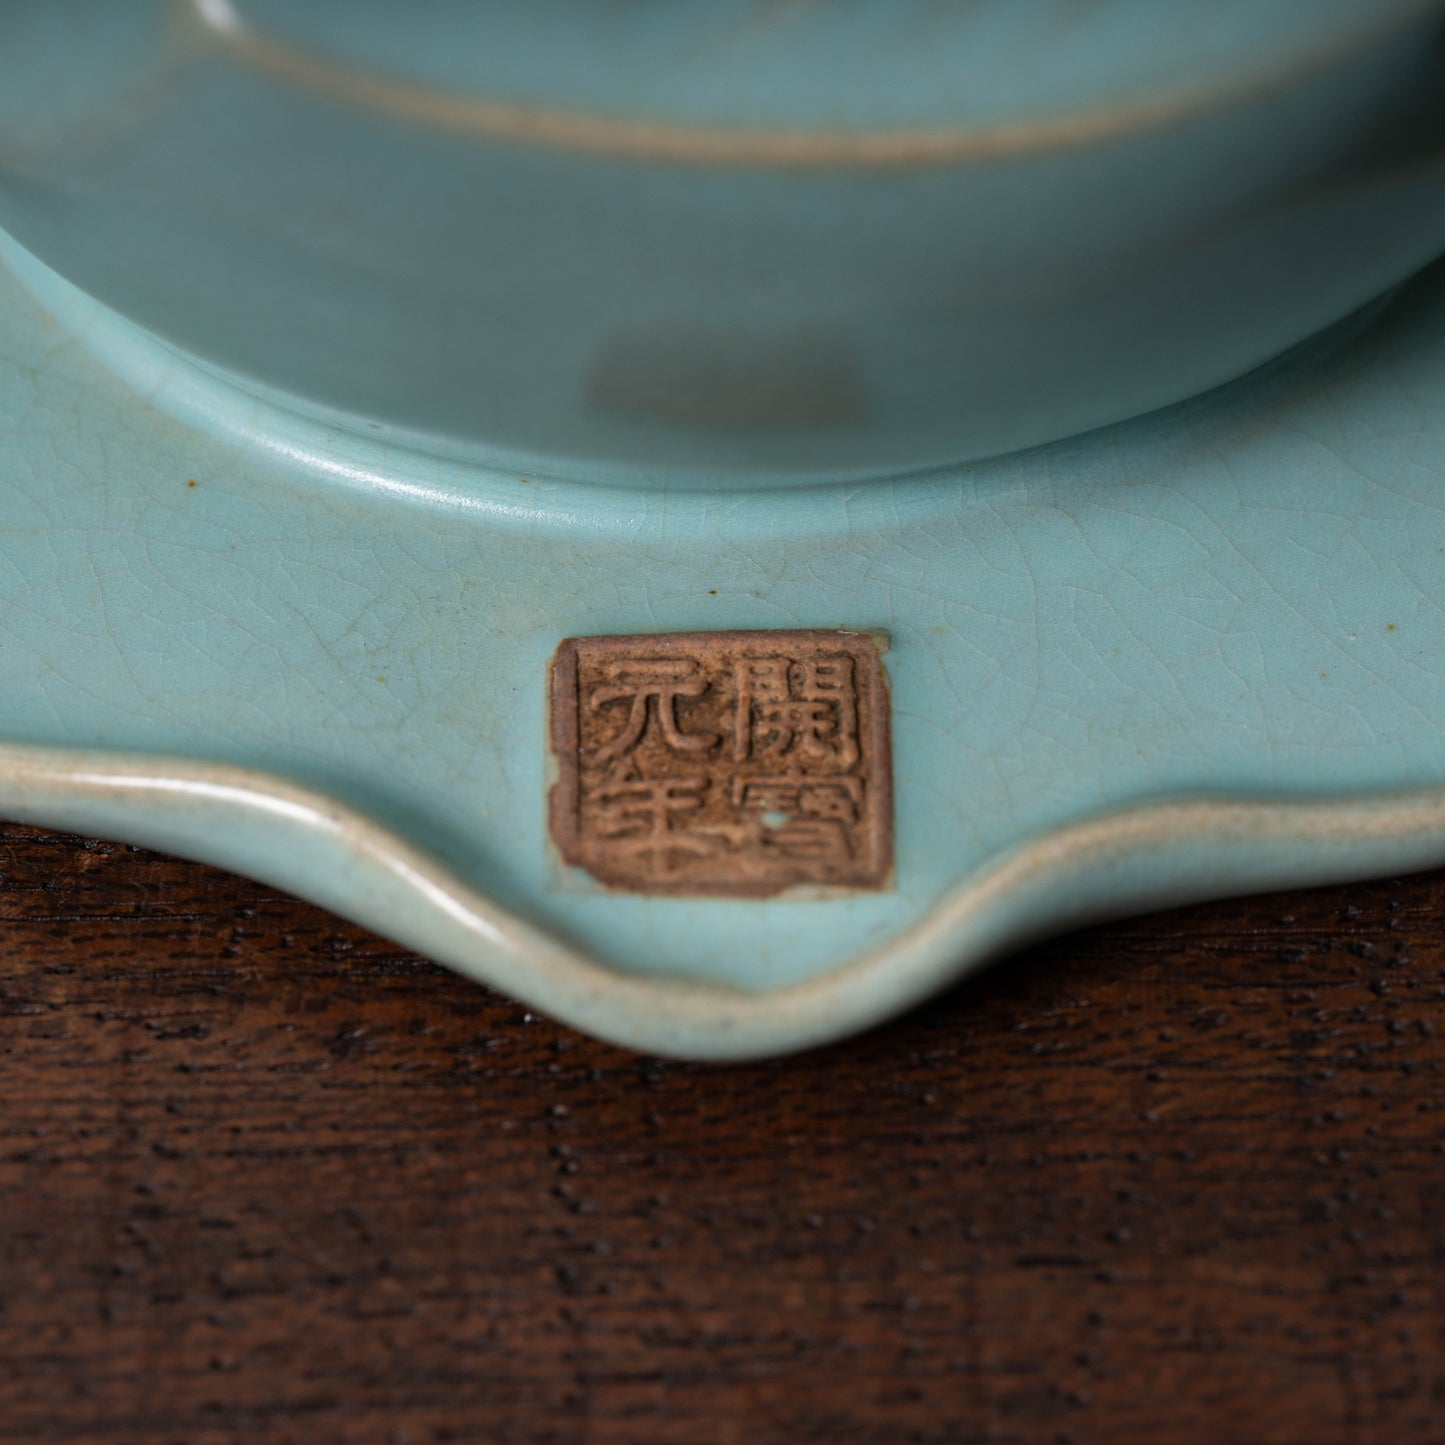 Qing Dynasty Ru-ware-like Celadon Ewer with Bird Shaped